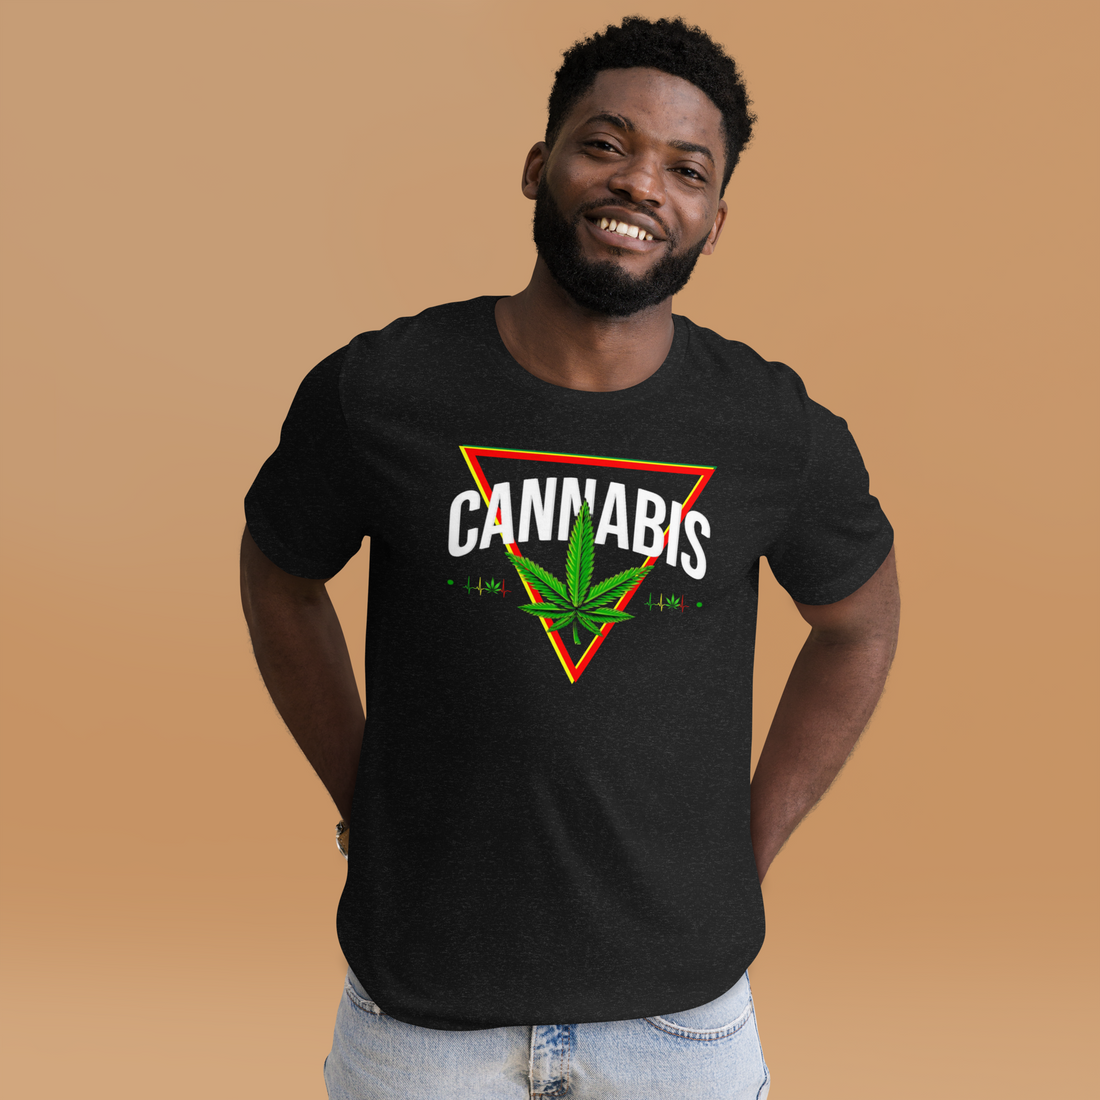 Weed / Cannabis Culture; Cannabis Traditions in Rastafarian Culture || Shop Marijuana T Shirts